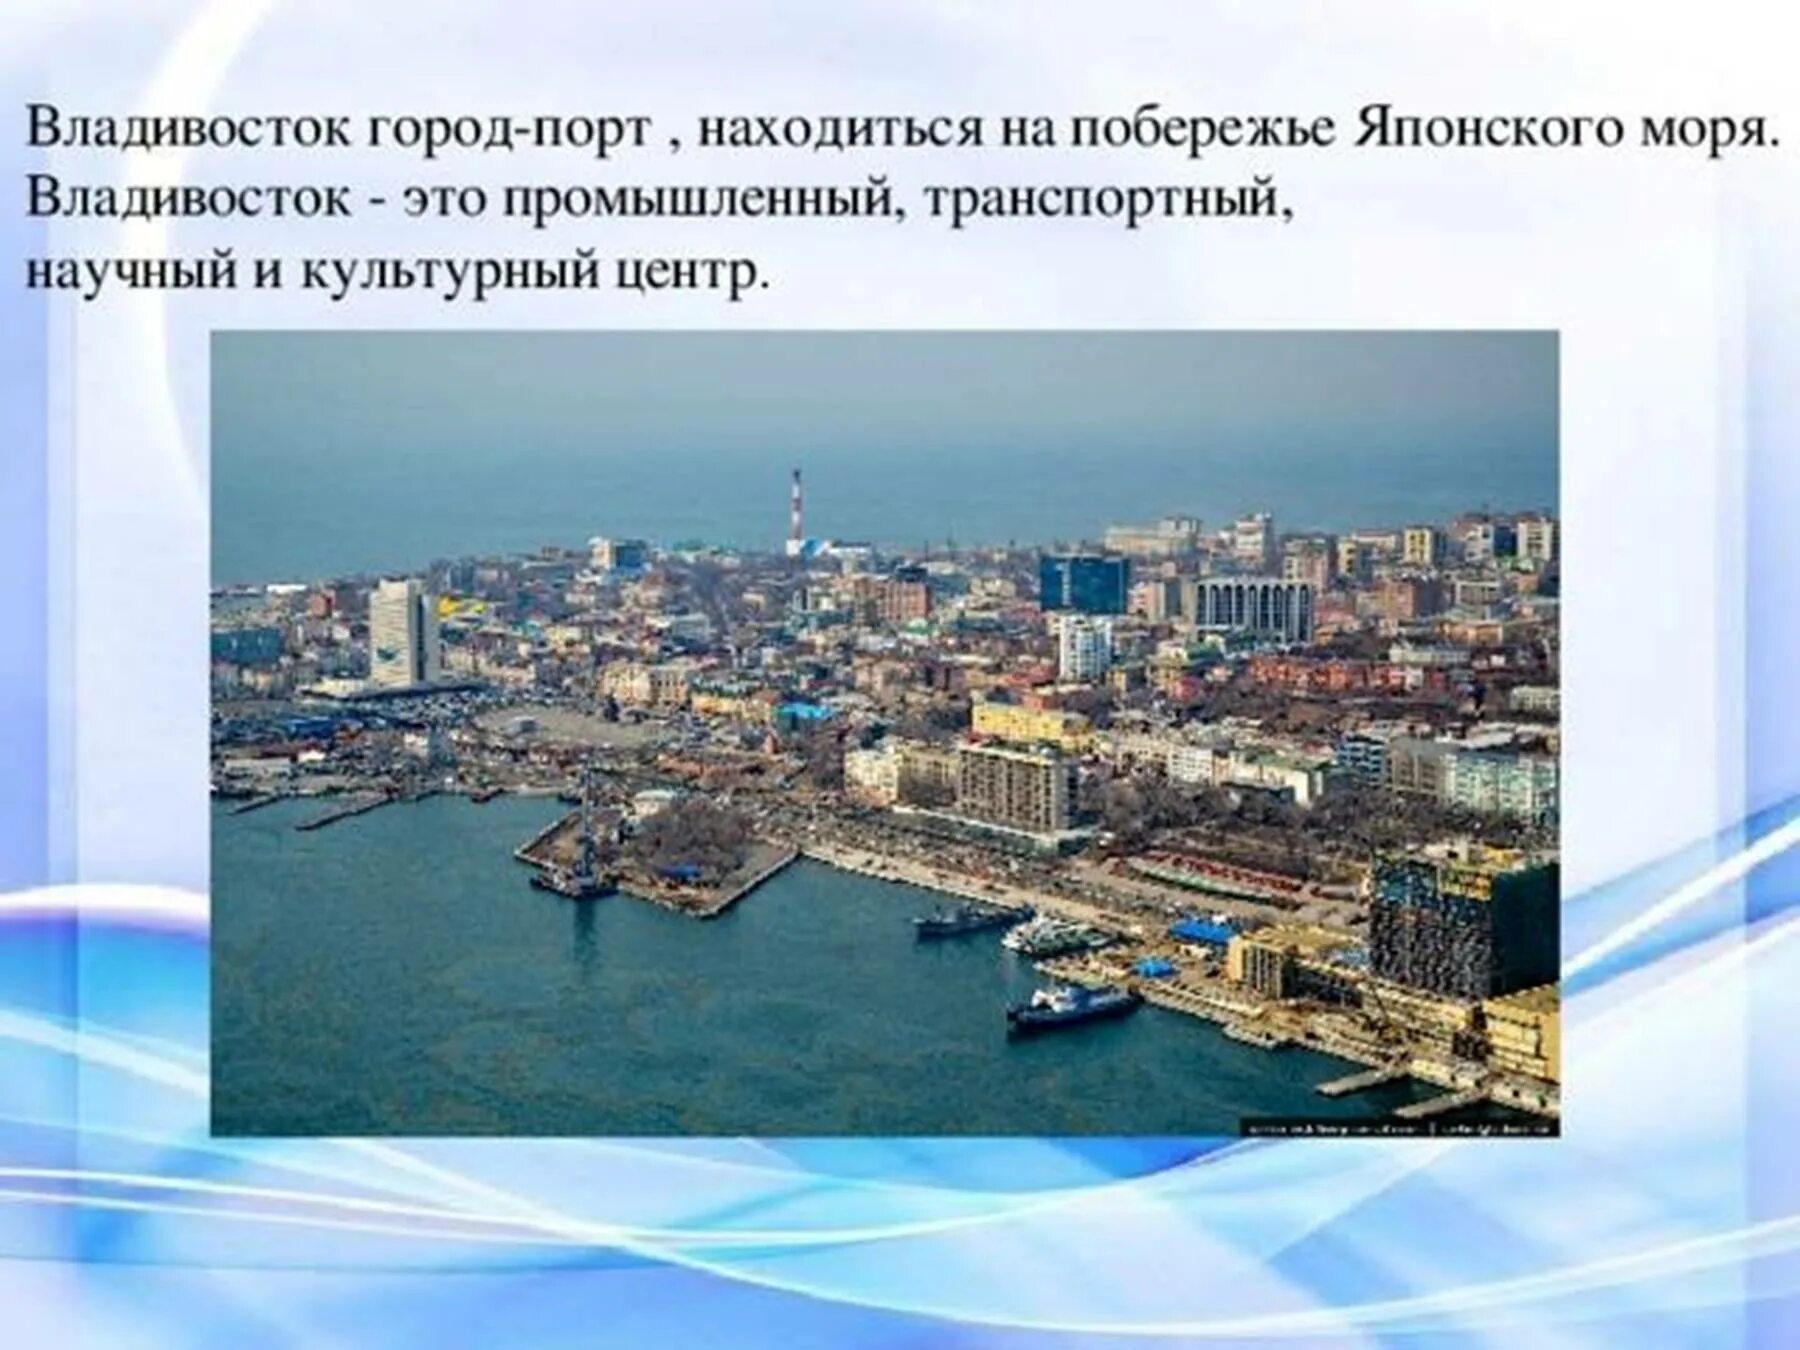 Является административным центром. Доклад о Владивостоке для 4 класса. Владивосток доклад. Проект про город Владивосток. Презентация про город Владивосток.